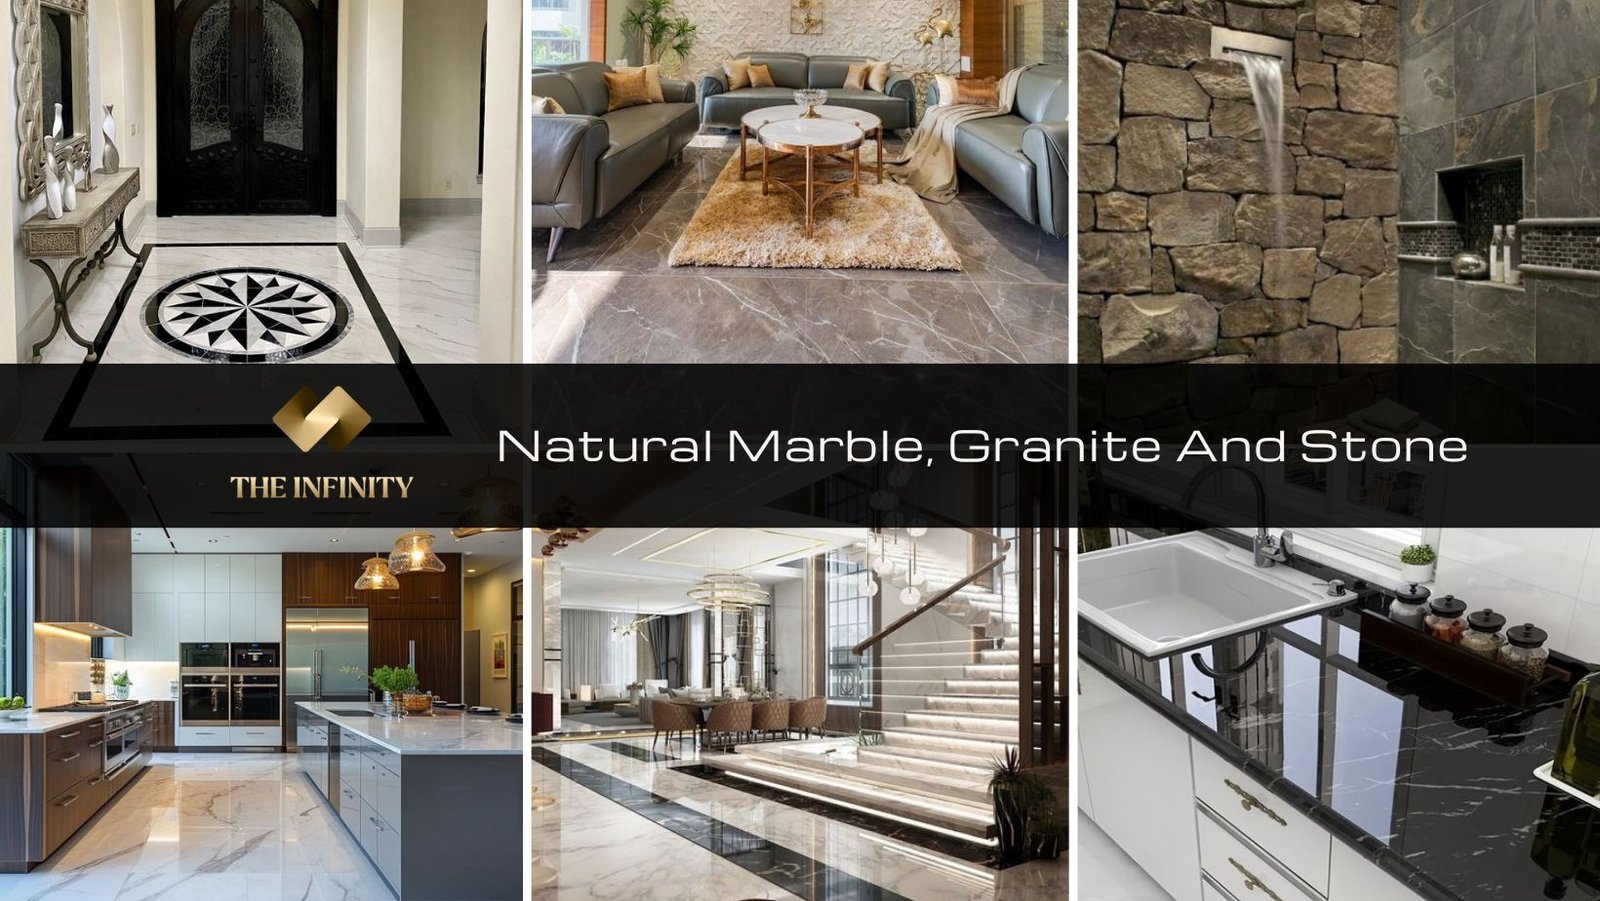 Natural Marble, Granite And Stone